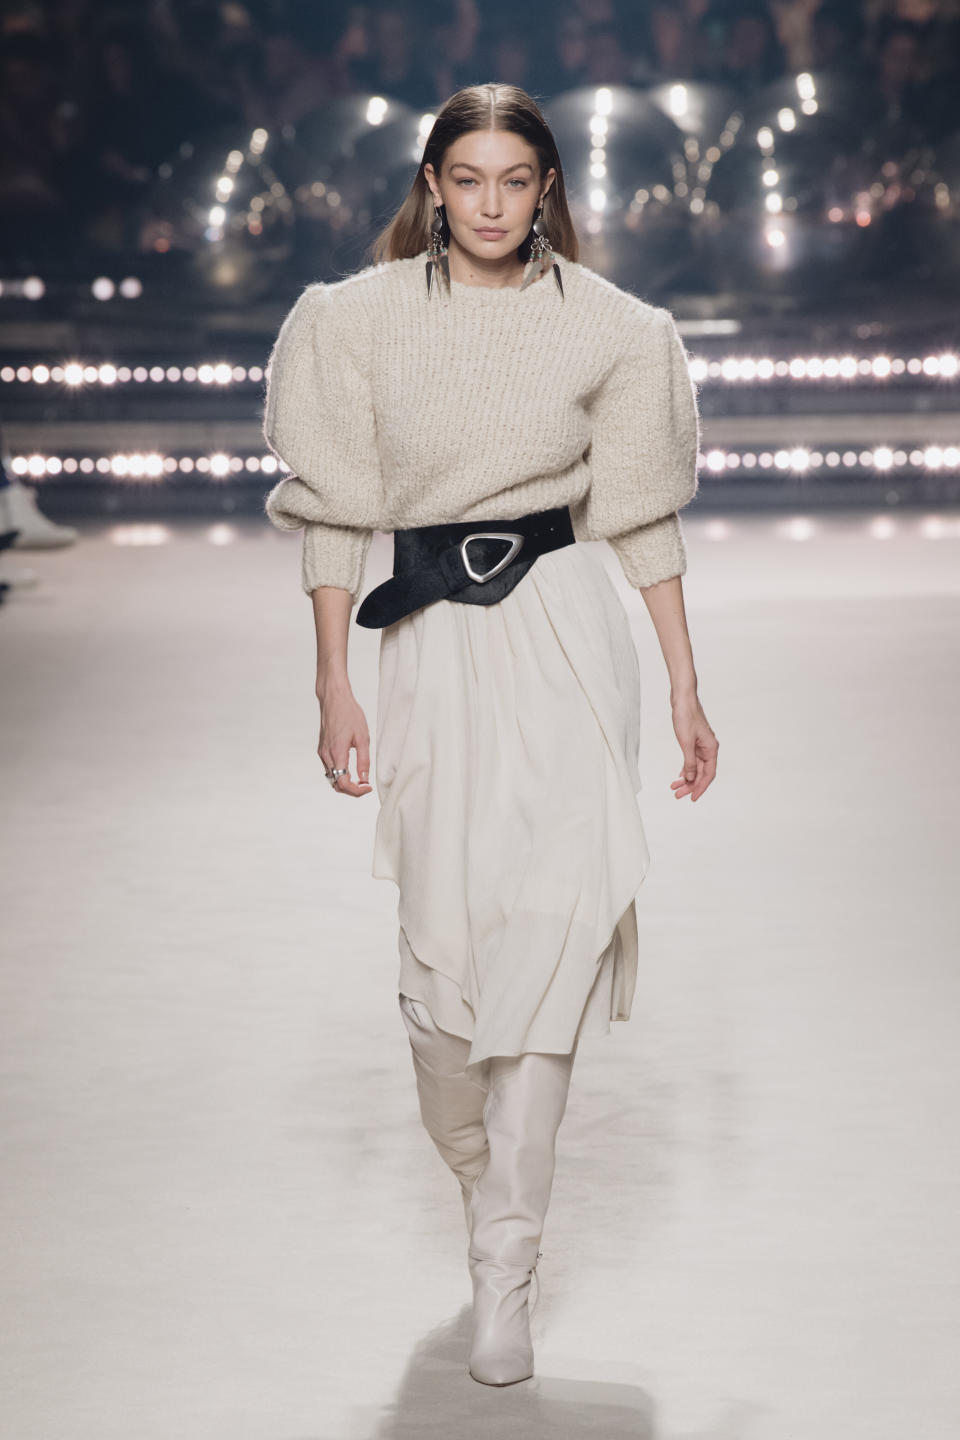 Gigi Hadid walks the runway at the Isabel Marant fall/winter 2020/2021 show during Paris Fashion Week on Feb. 27.